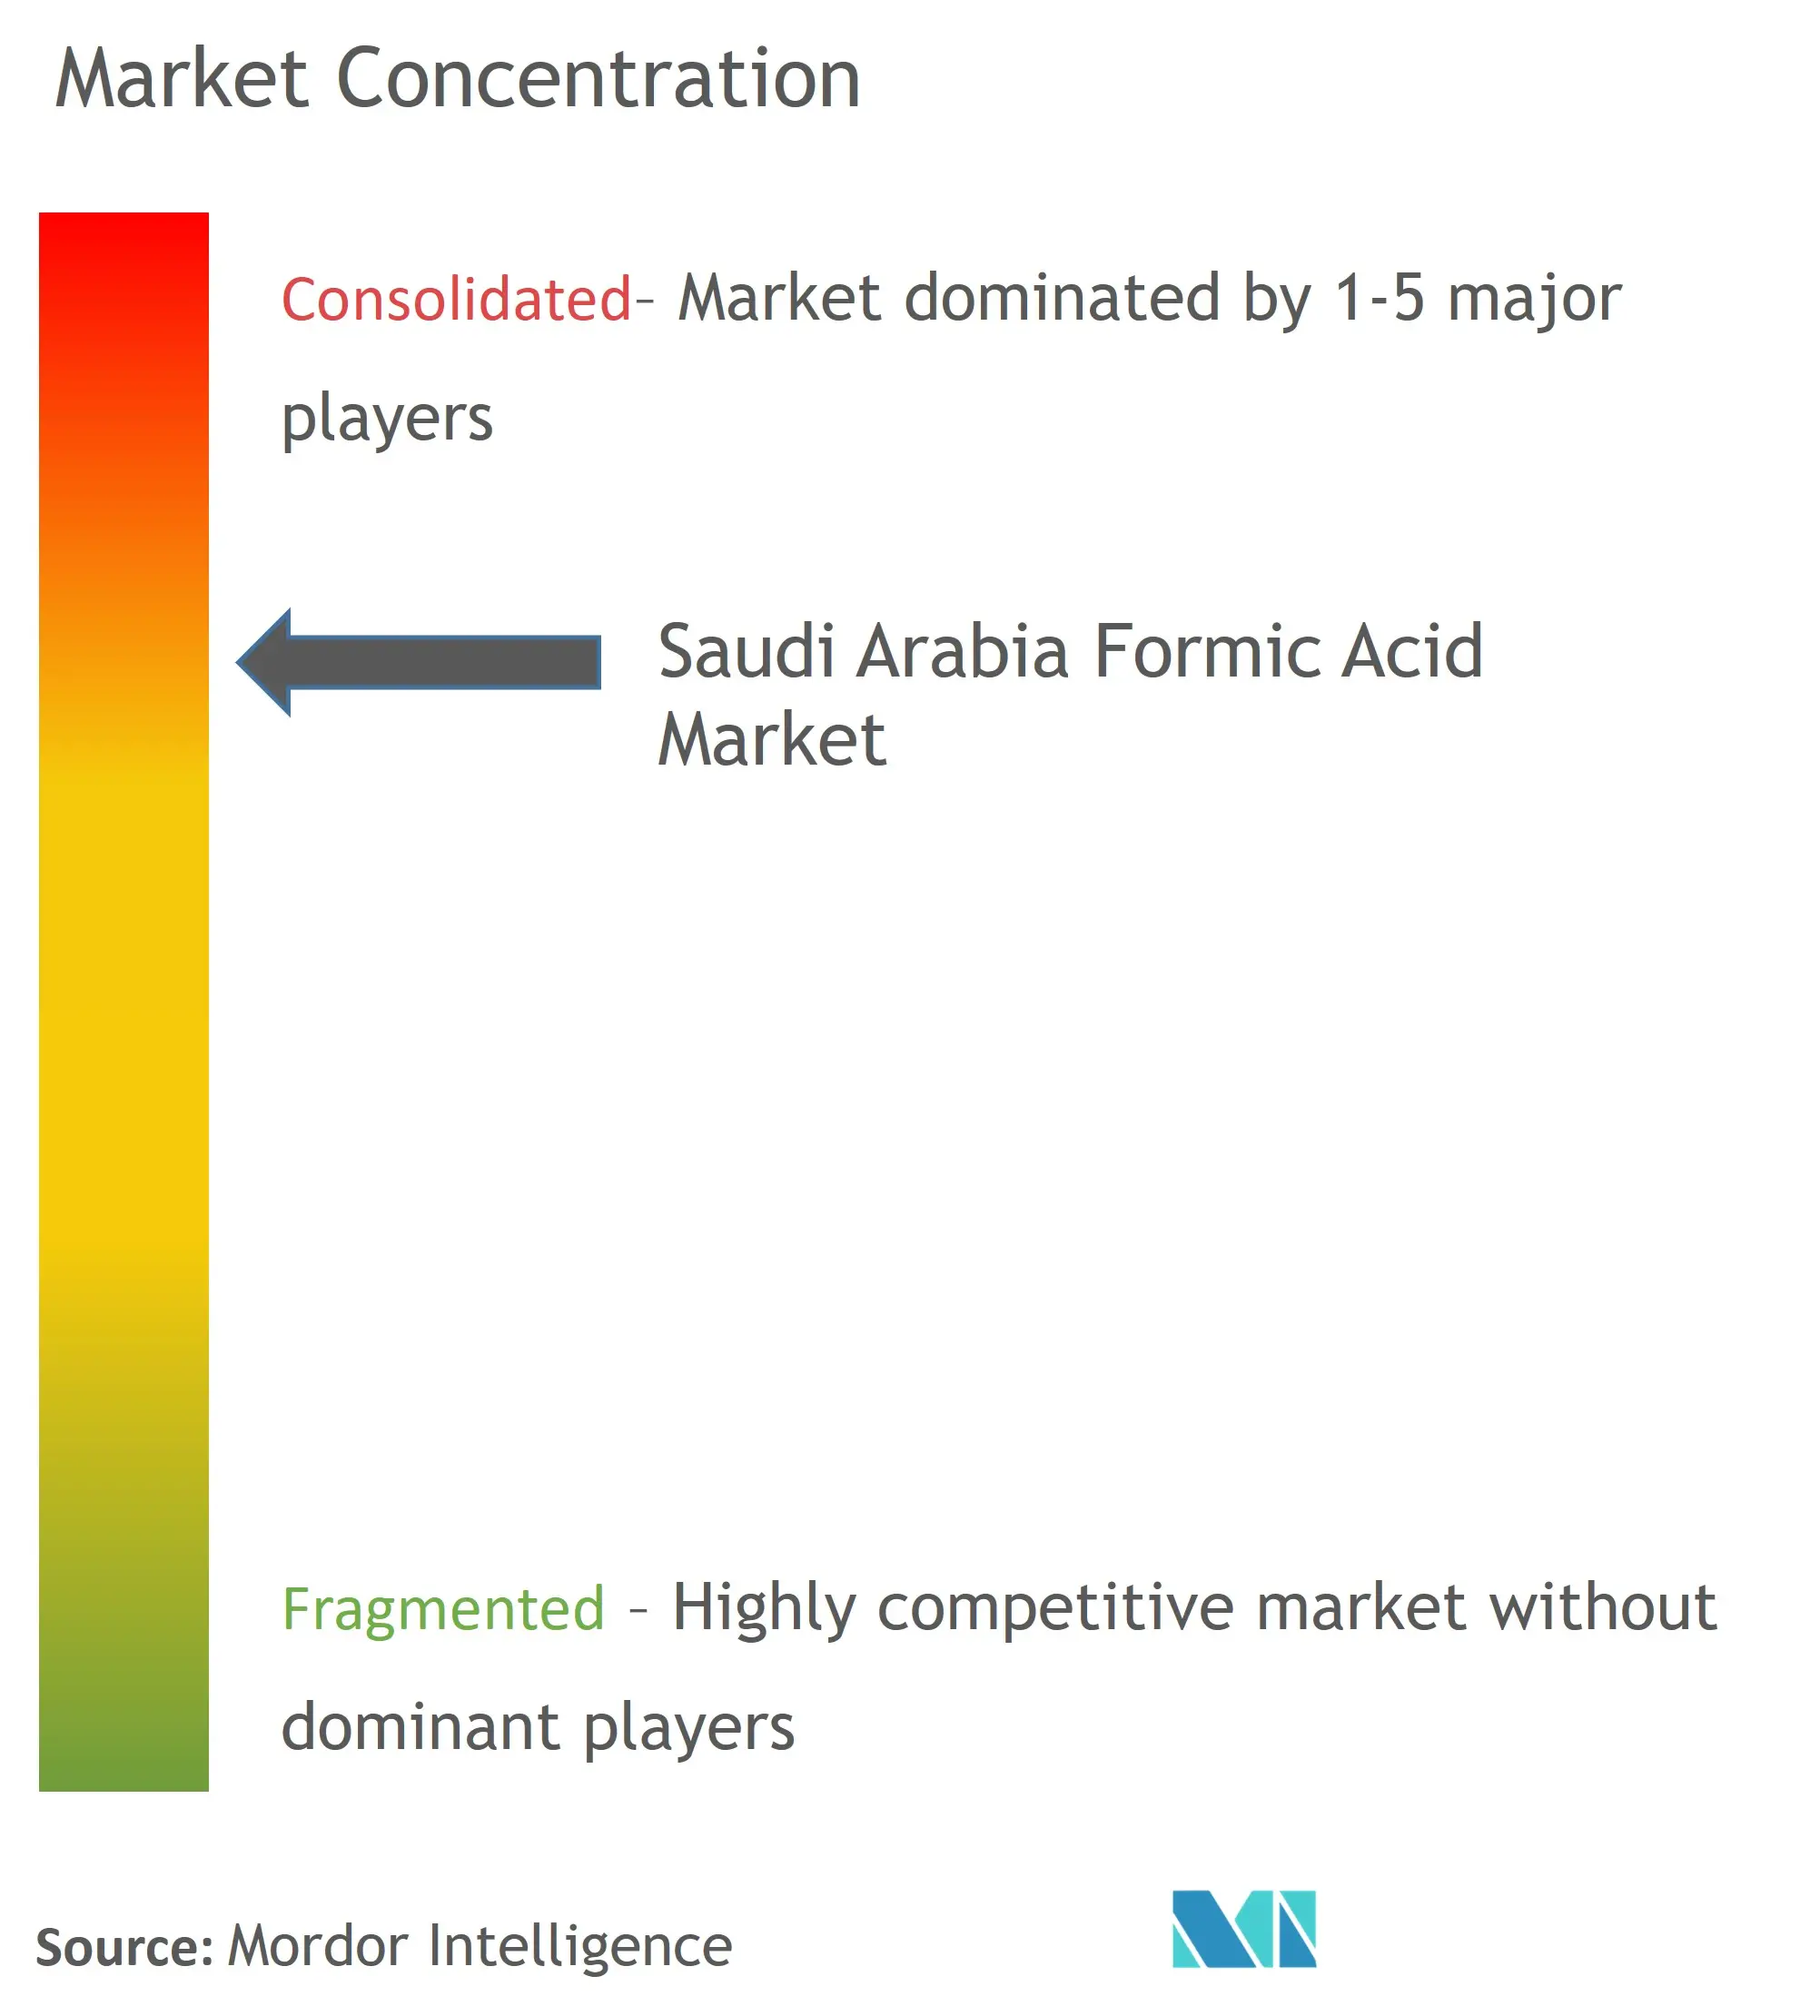 Saudi Arabia Formic Acid Market Concentration